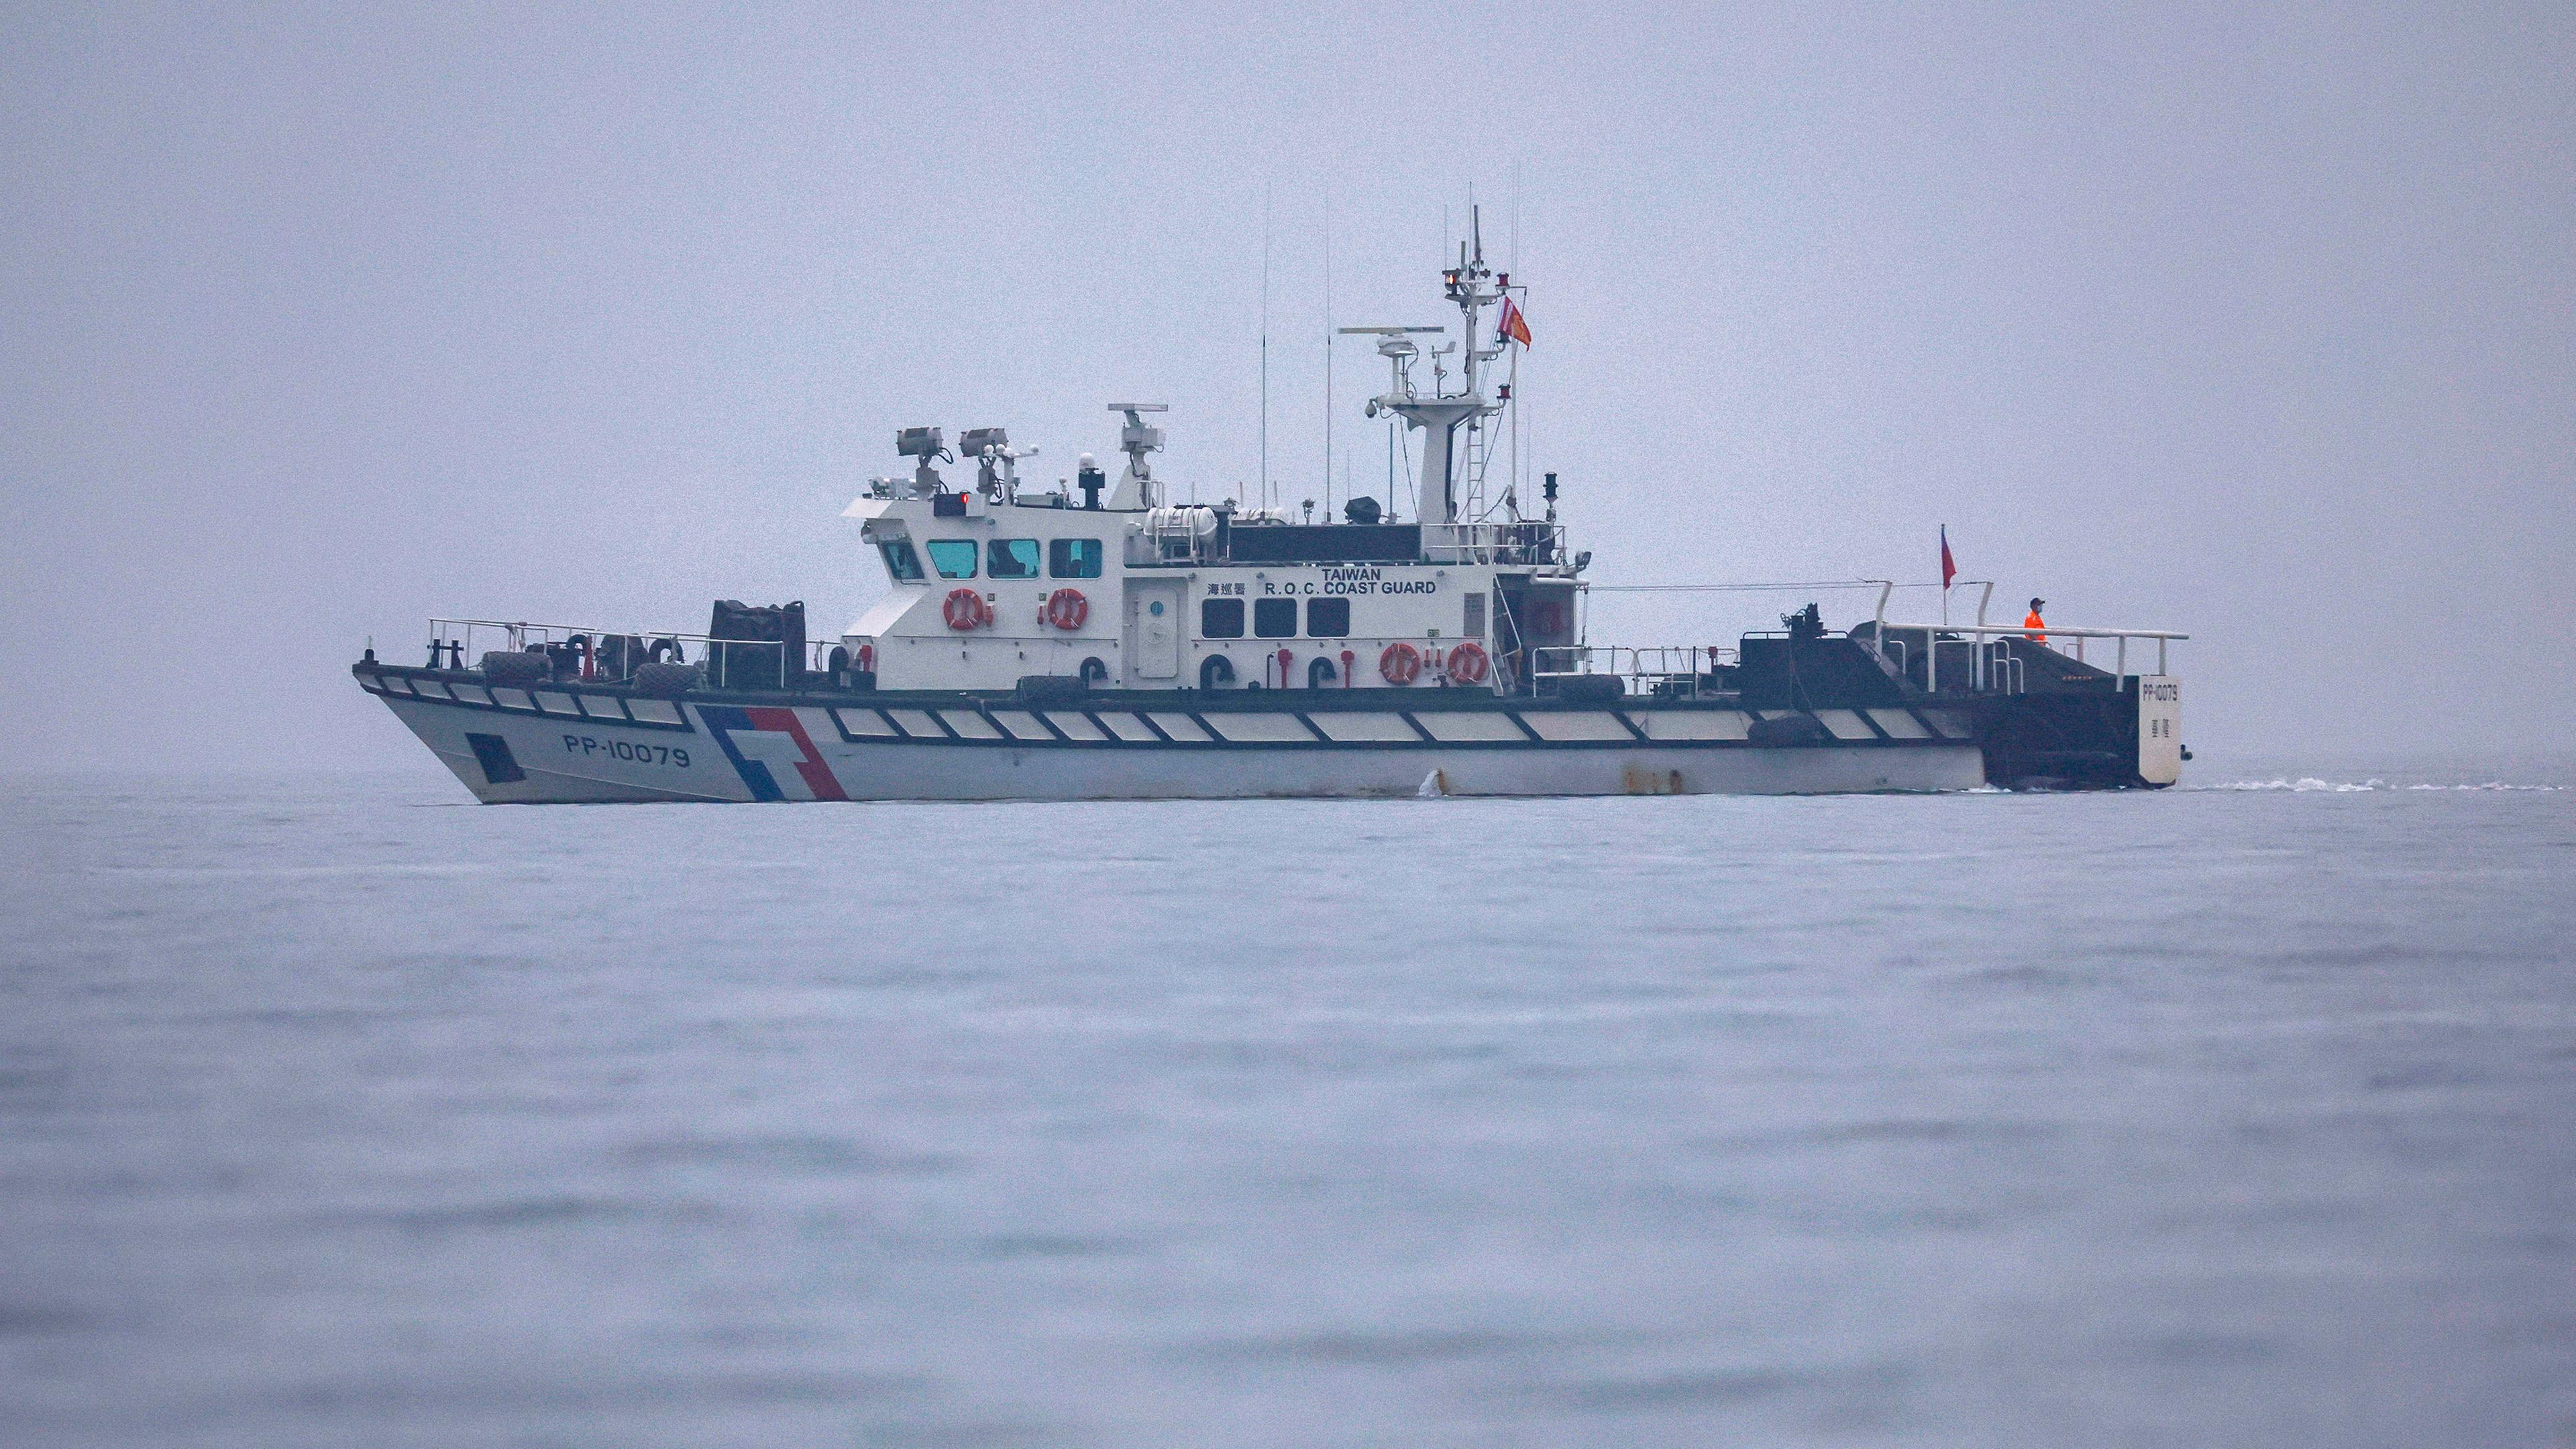 A Taiwanese Coast Guard vessel patrols along the Kinmen-Xiamen water passage, near the maritime boundary between Taiwan and China